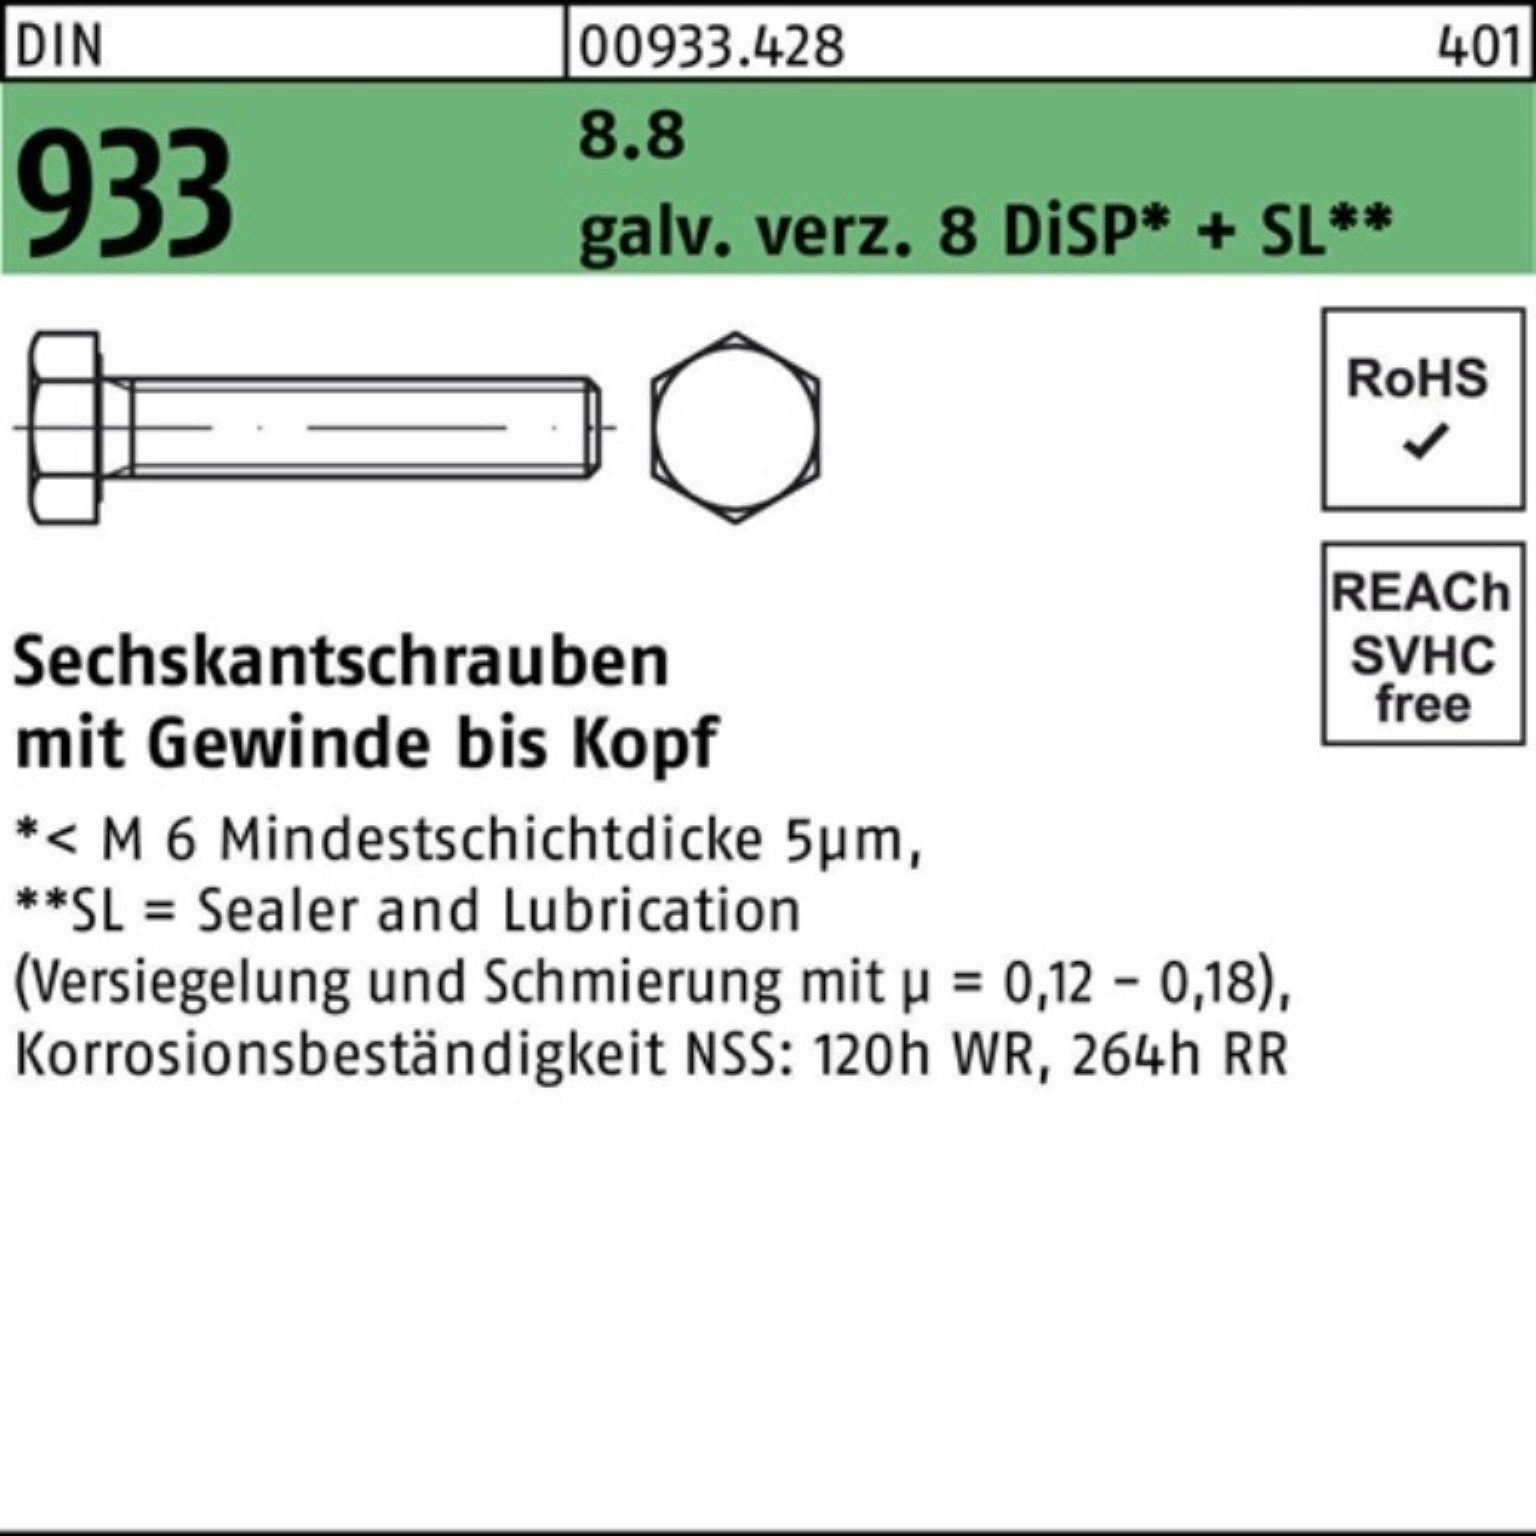 Pack gal 8 85 DIN Reyher Sechskantschraube + Sechskantschraube DiSP M16x VG SL 100er Zn 933 8.8